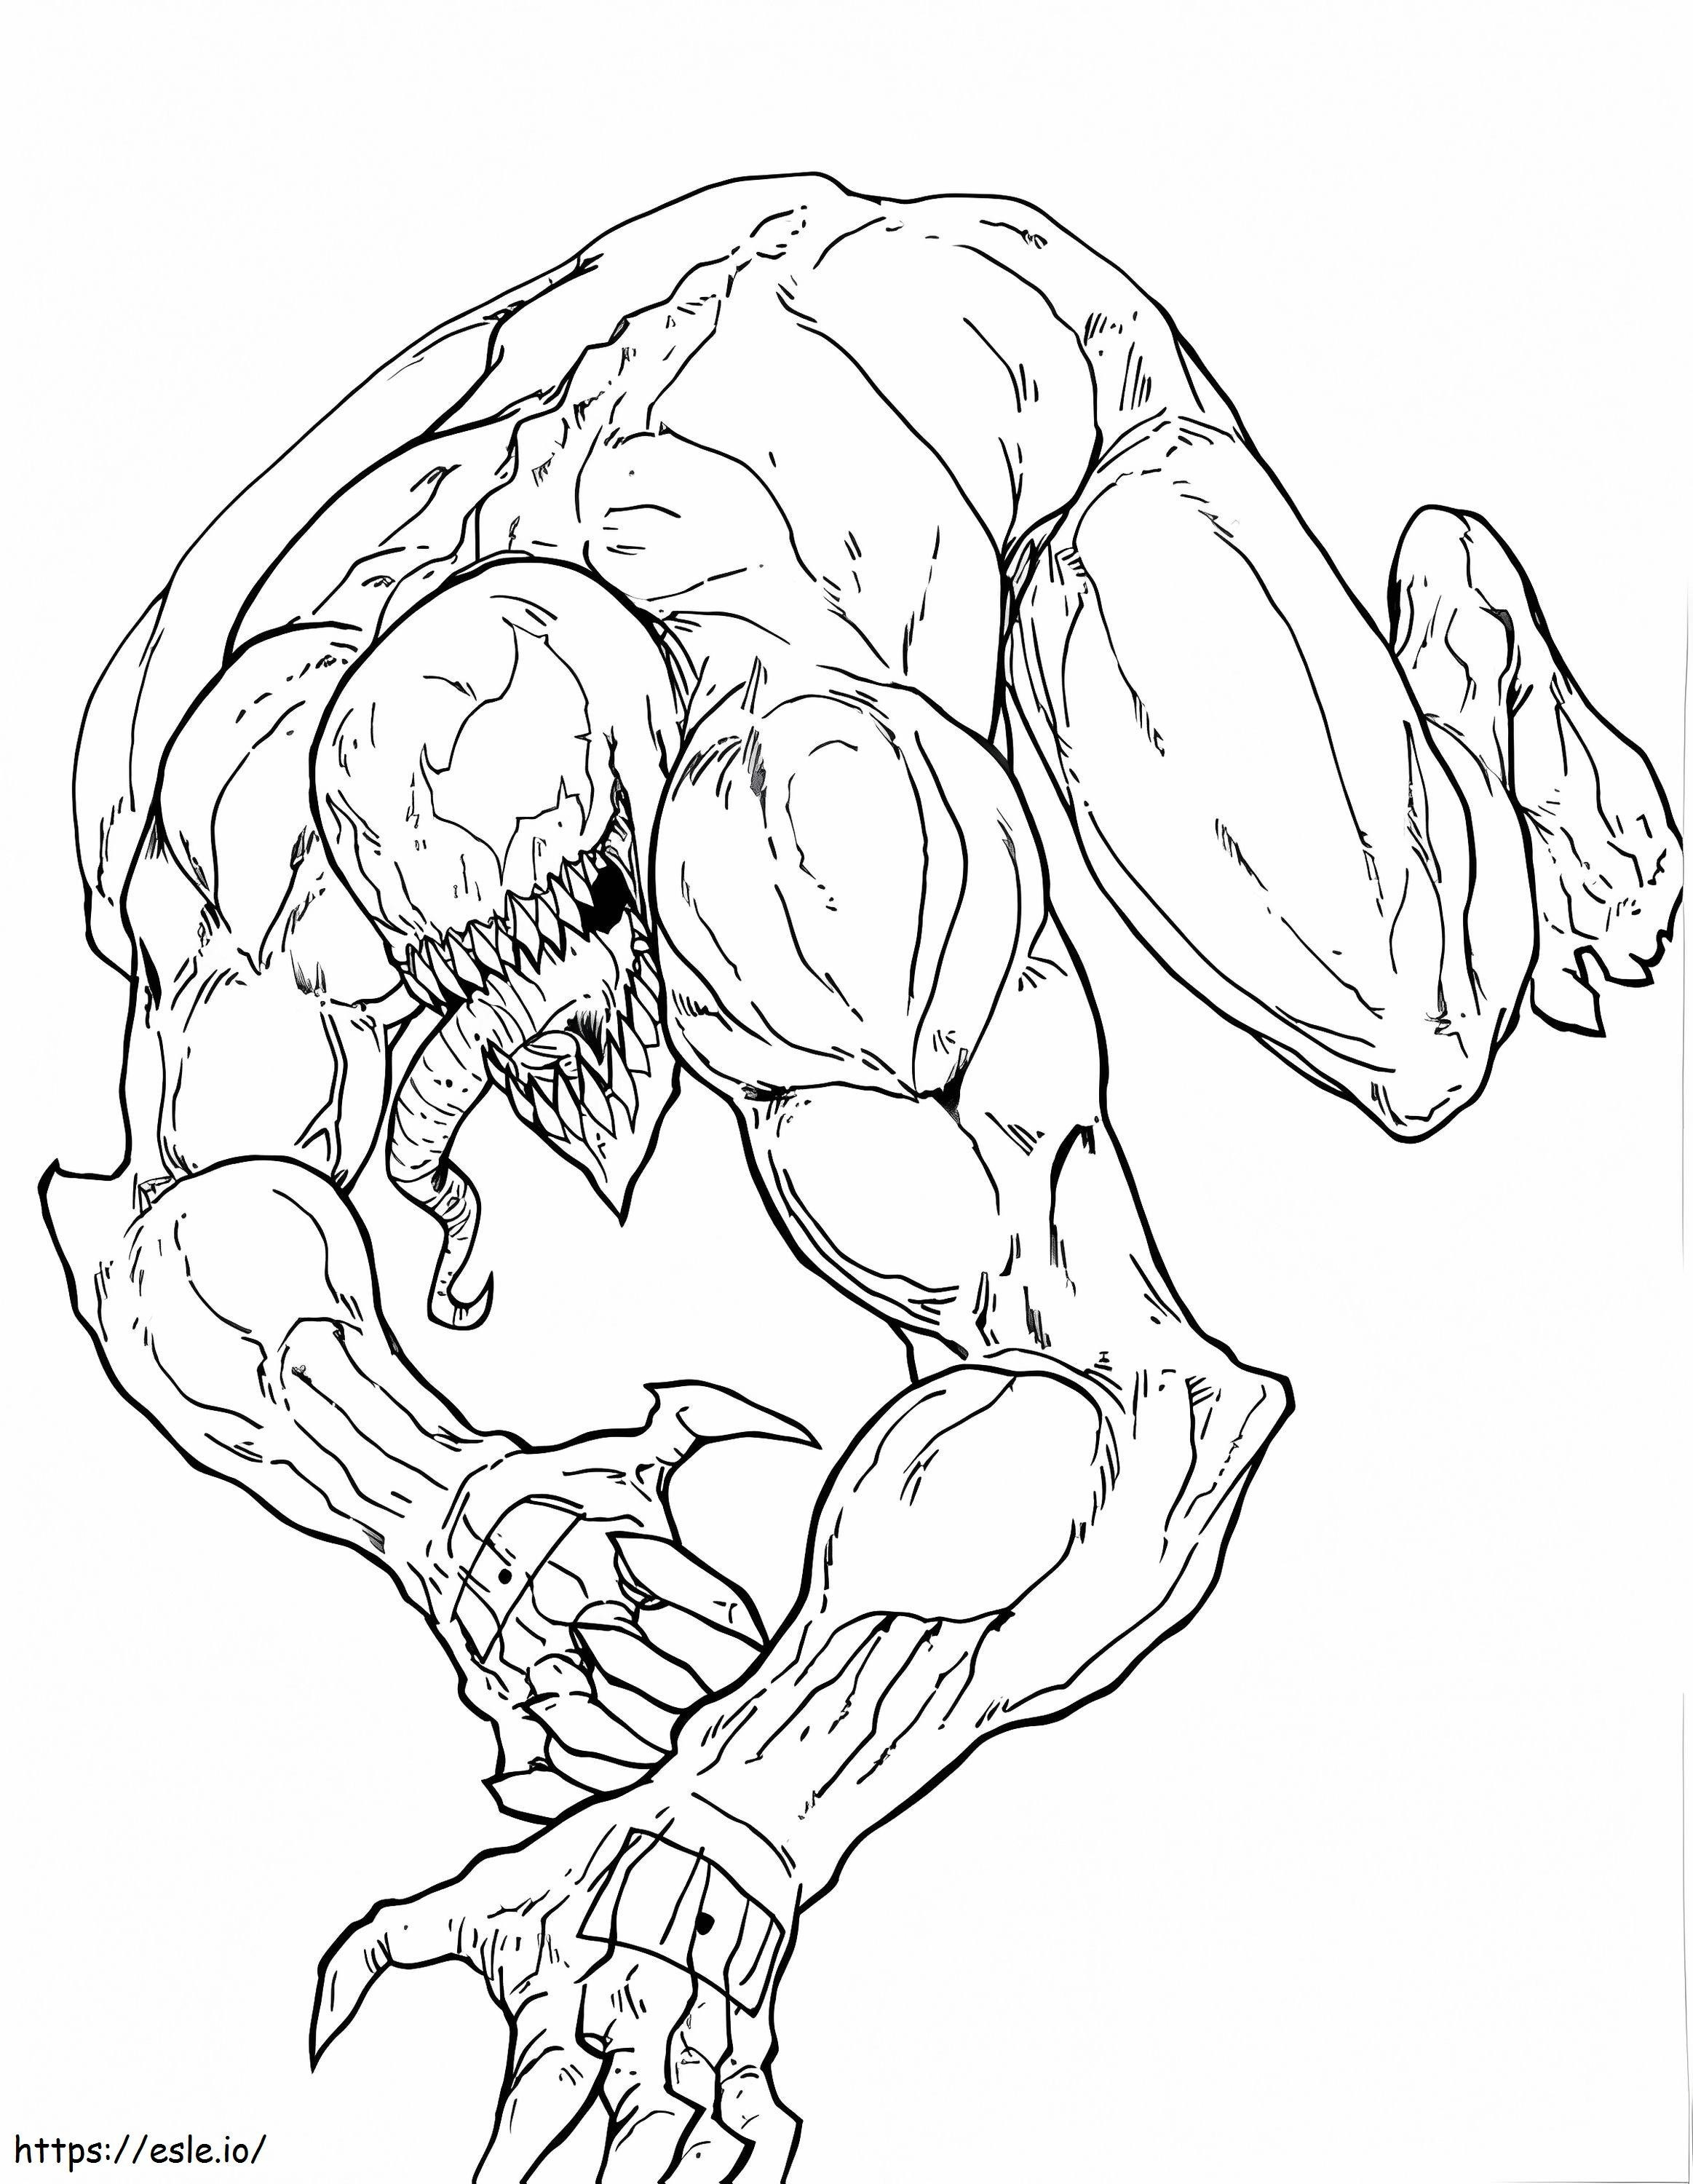 Scary Venom coloring page